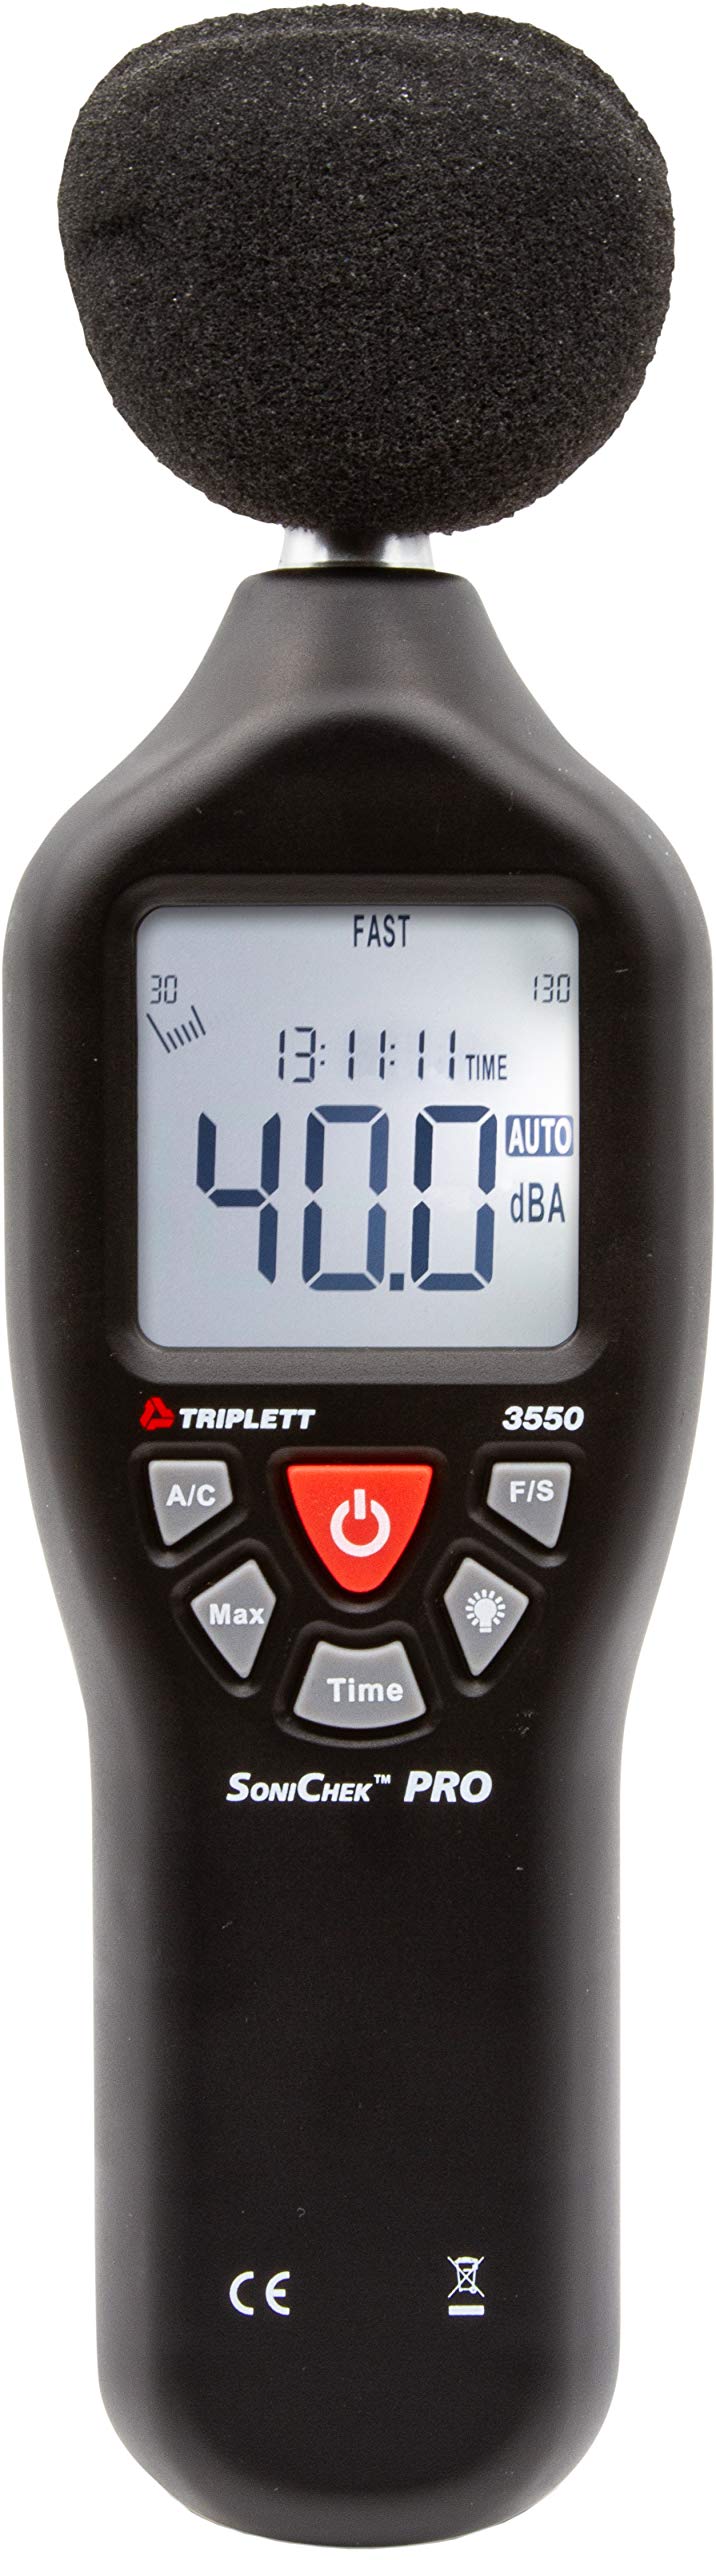 [Australia - AusPower] - Triplett SoniChek PRO Professional Digital Sound Level Meter Designed to EC651 (Type 2) and ANSI S1.4 (Type 2) Standards - A/C Weighted Measurement Reads 30 to 130dB (3550) 3550 SoniChek PRO Standard 